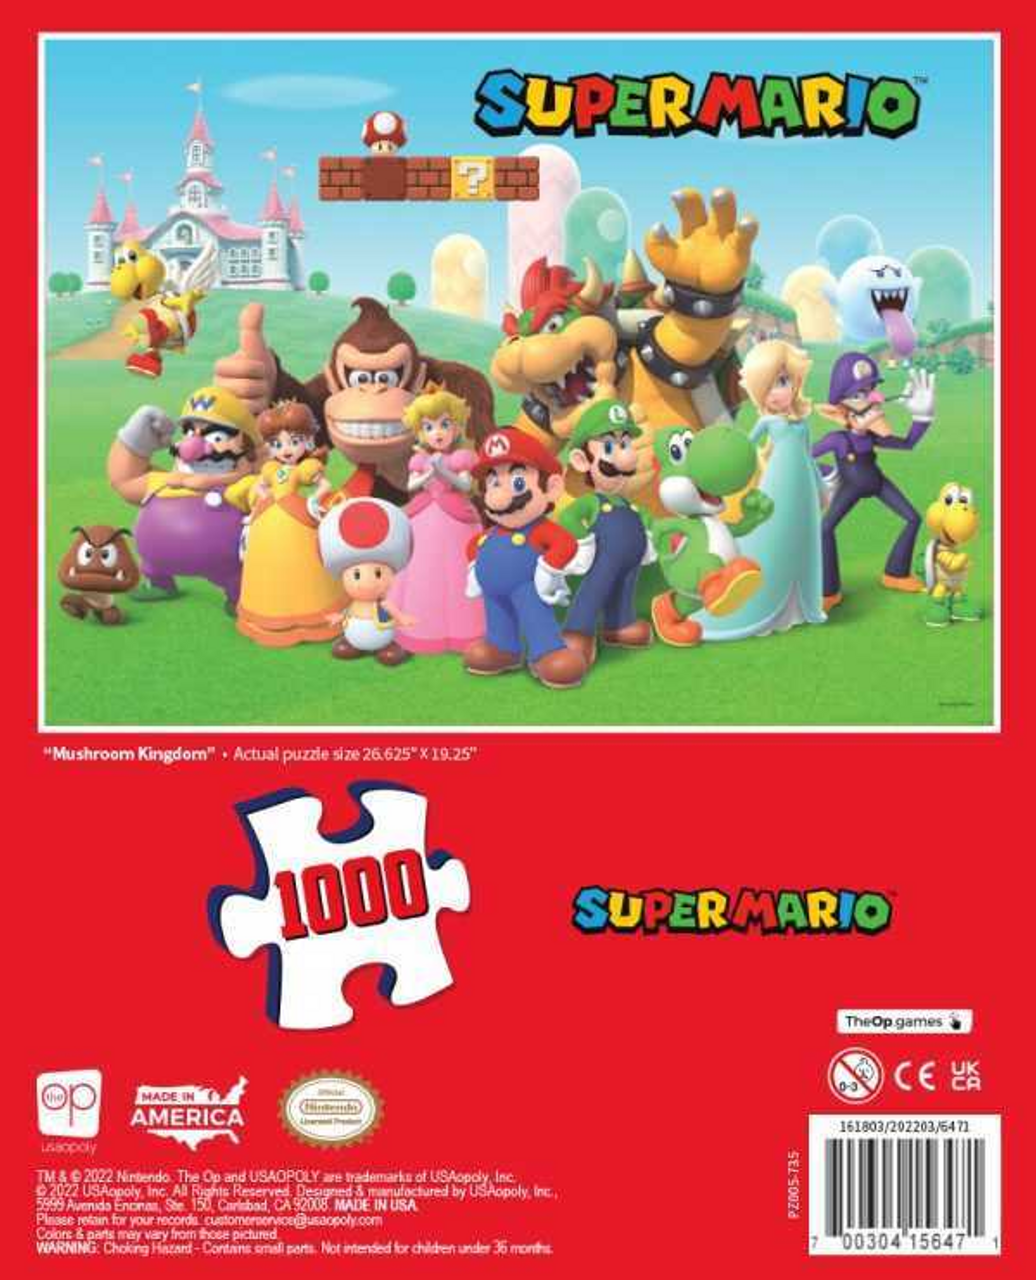 Super Mario "Mushroom Kingdom 1000 Piece Puzzle